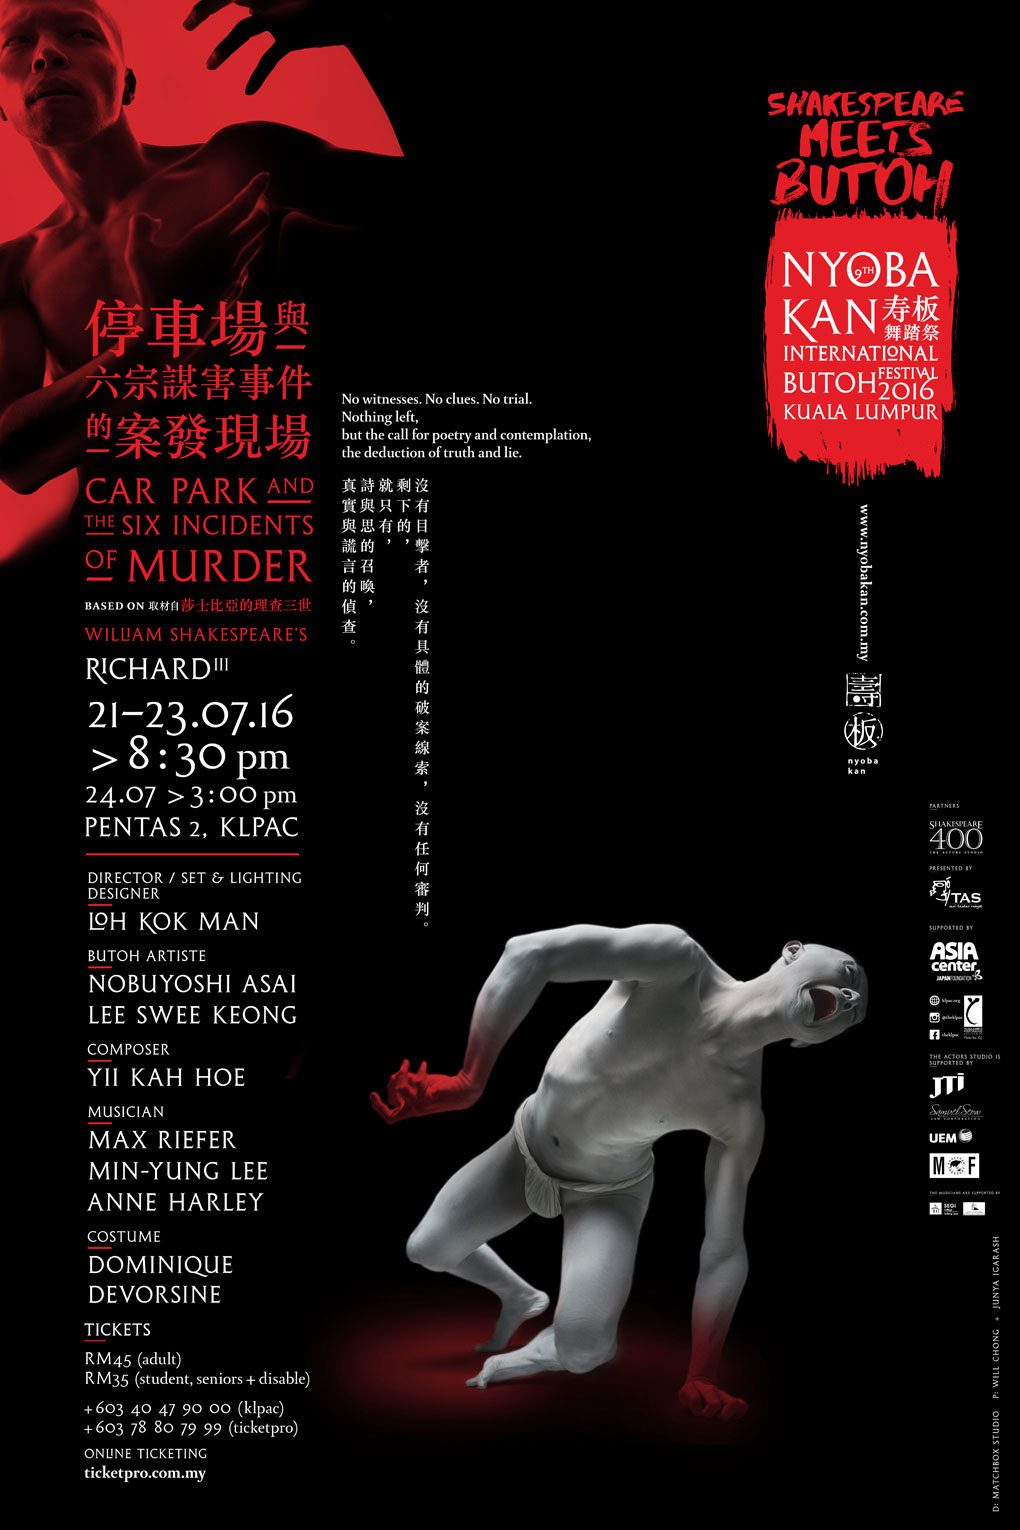 Nyoba Kan butoh festival Shakespeare Meets Butoh nobuyoshi asai matchbox studio butoh poster